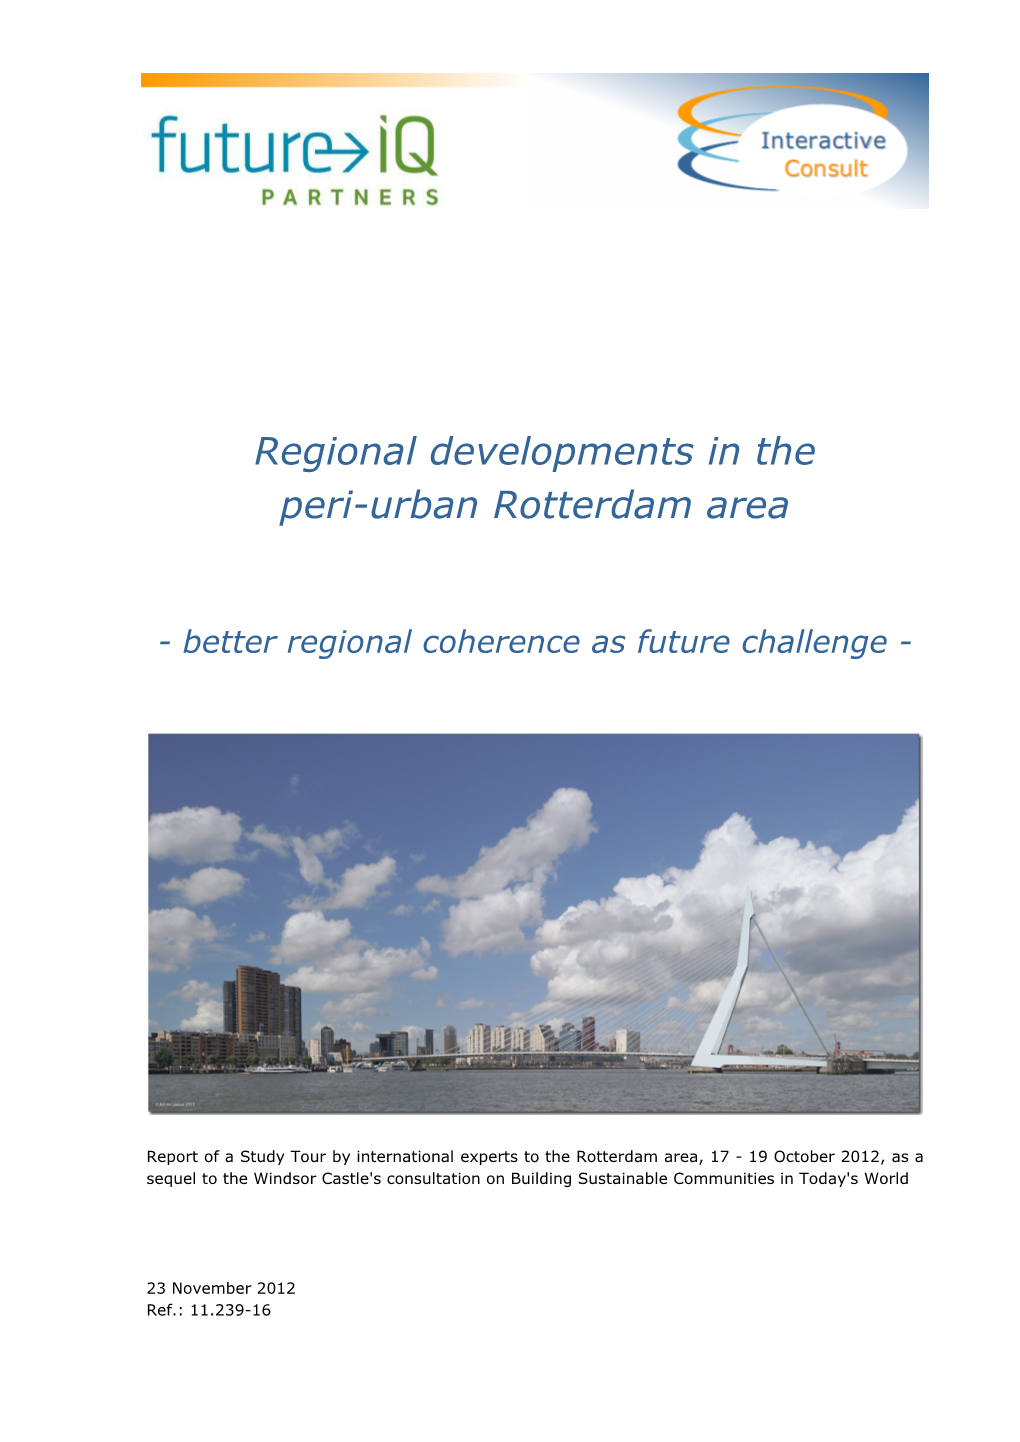 Regional Developments in the Peri-Urban Rotterdam Area